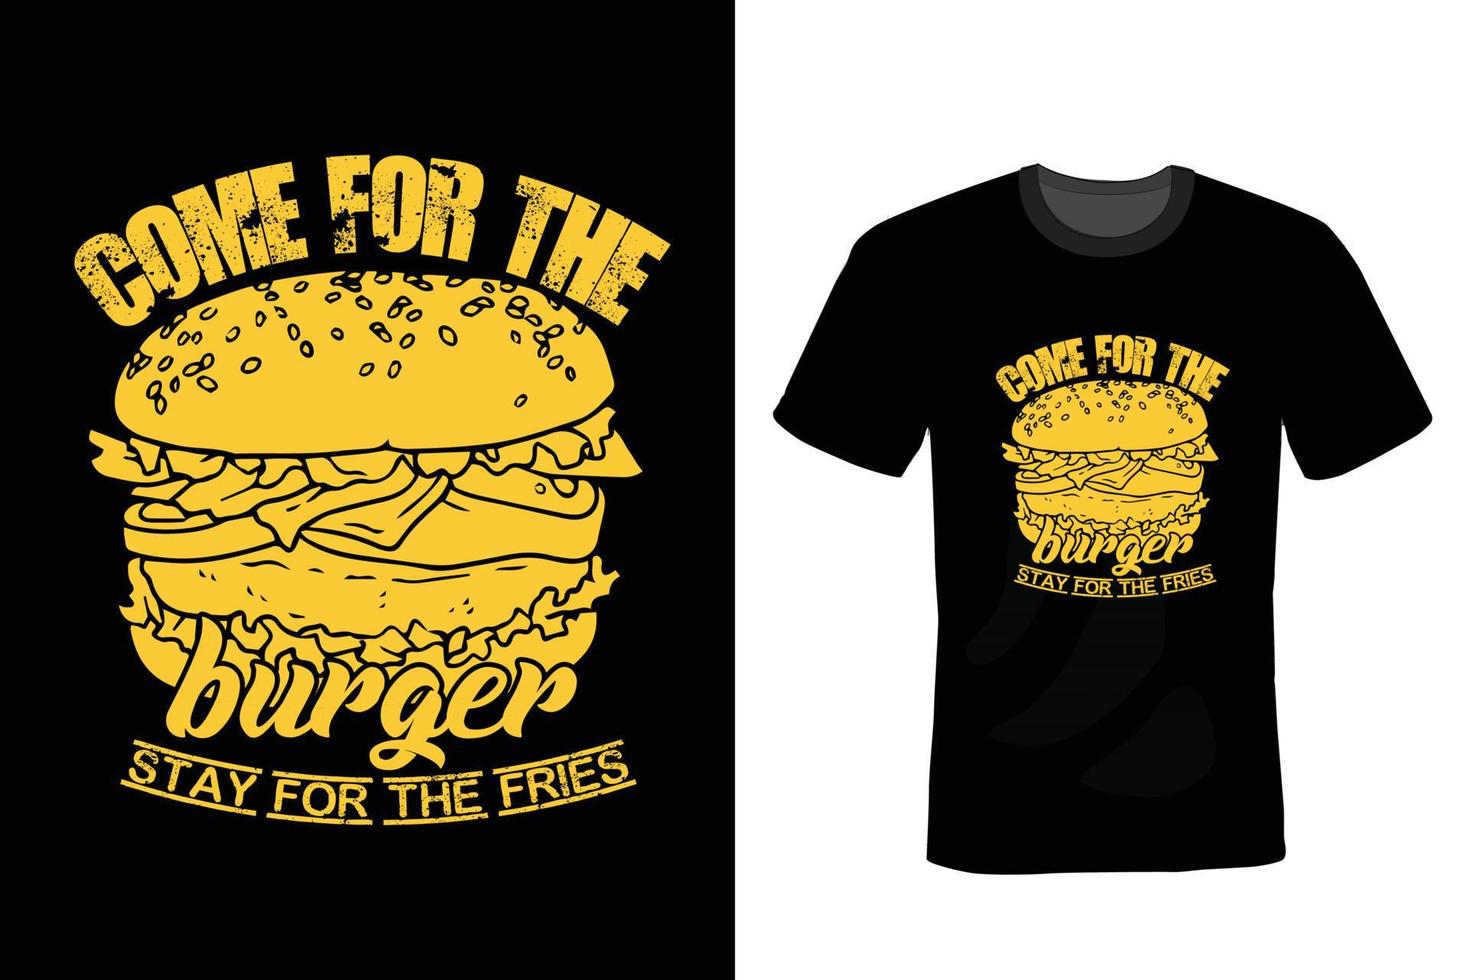 Burger T shirt design, vintage, typography vector